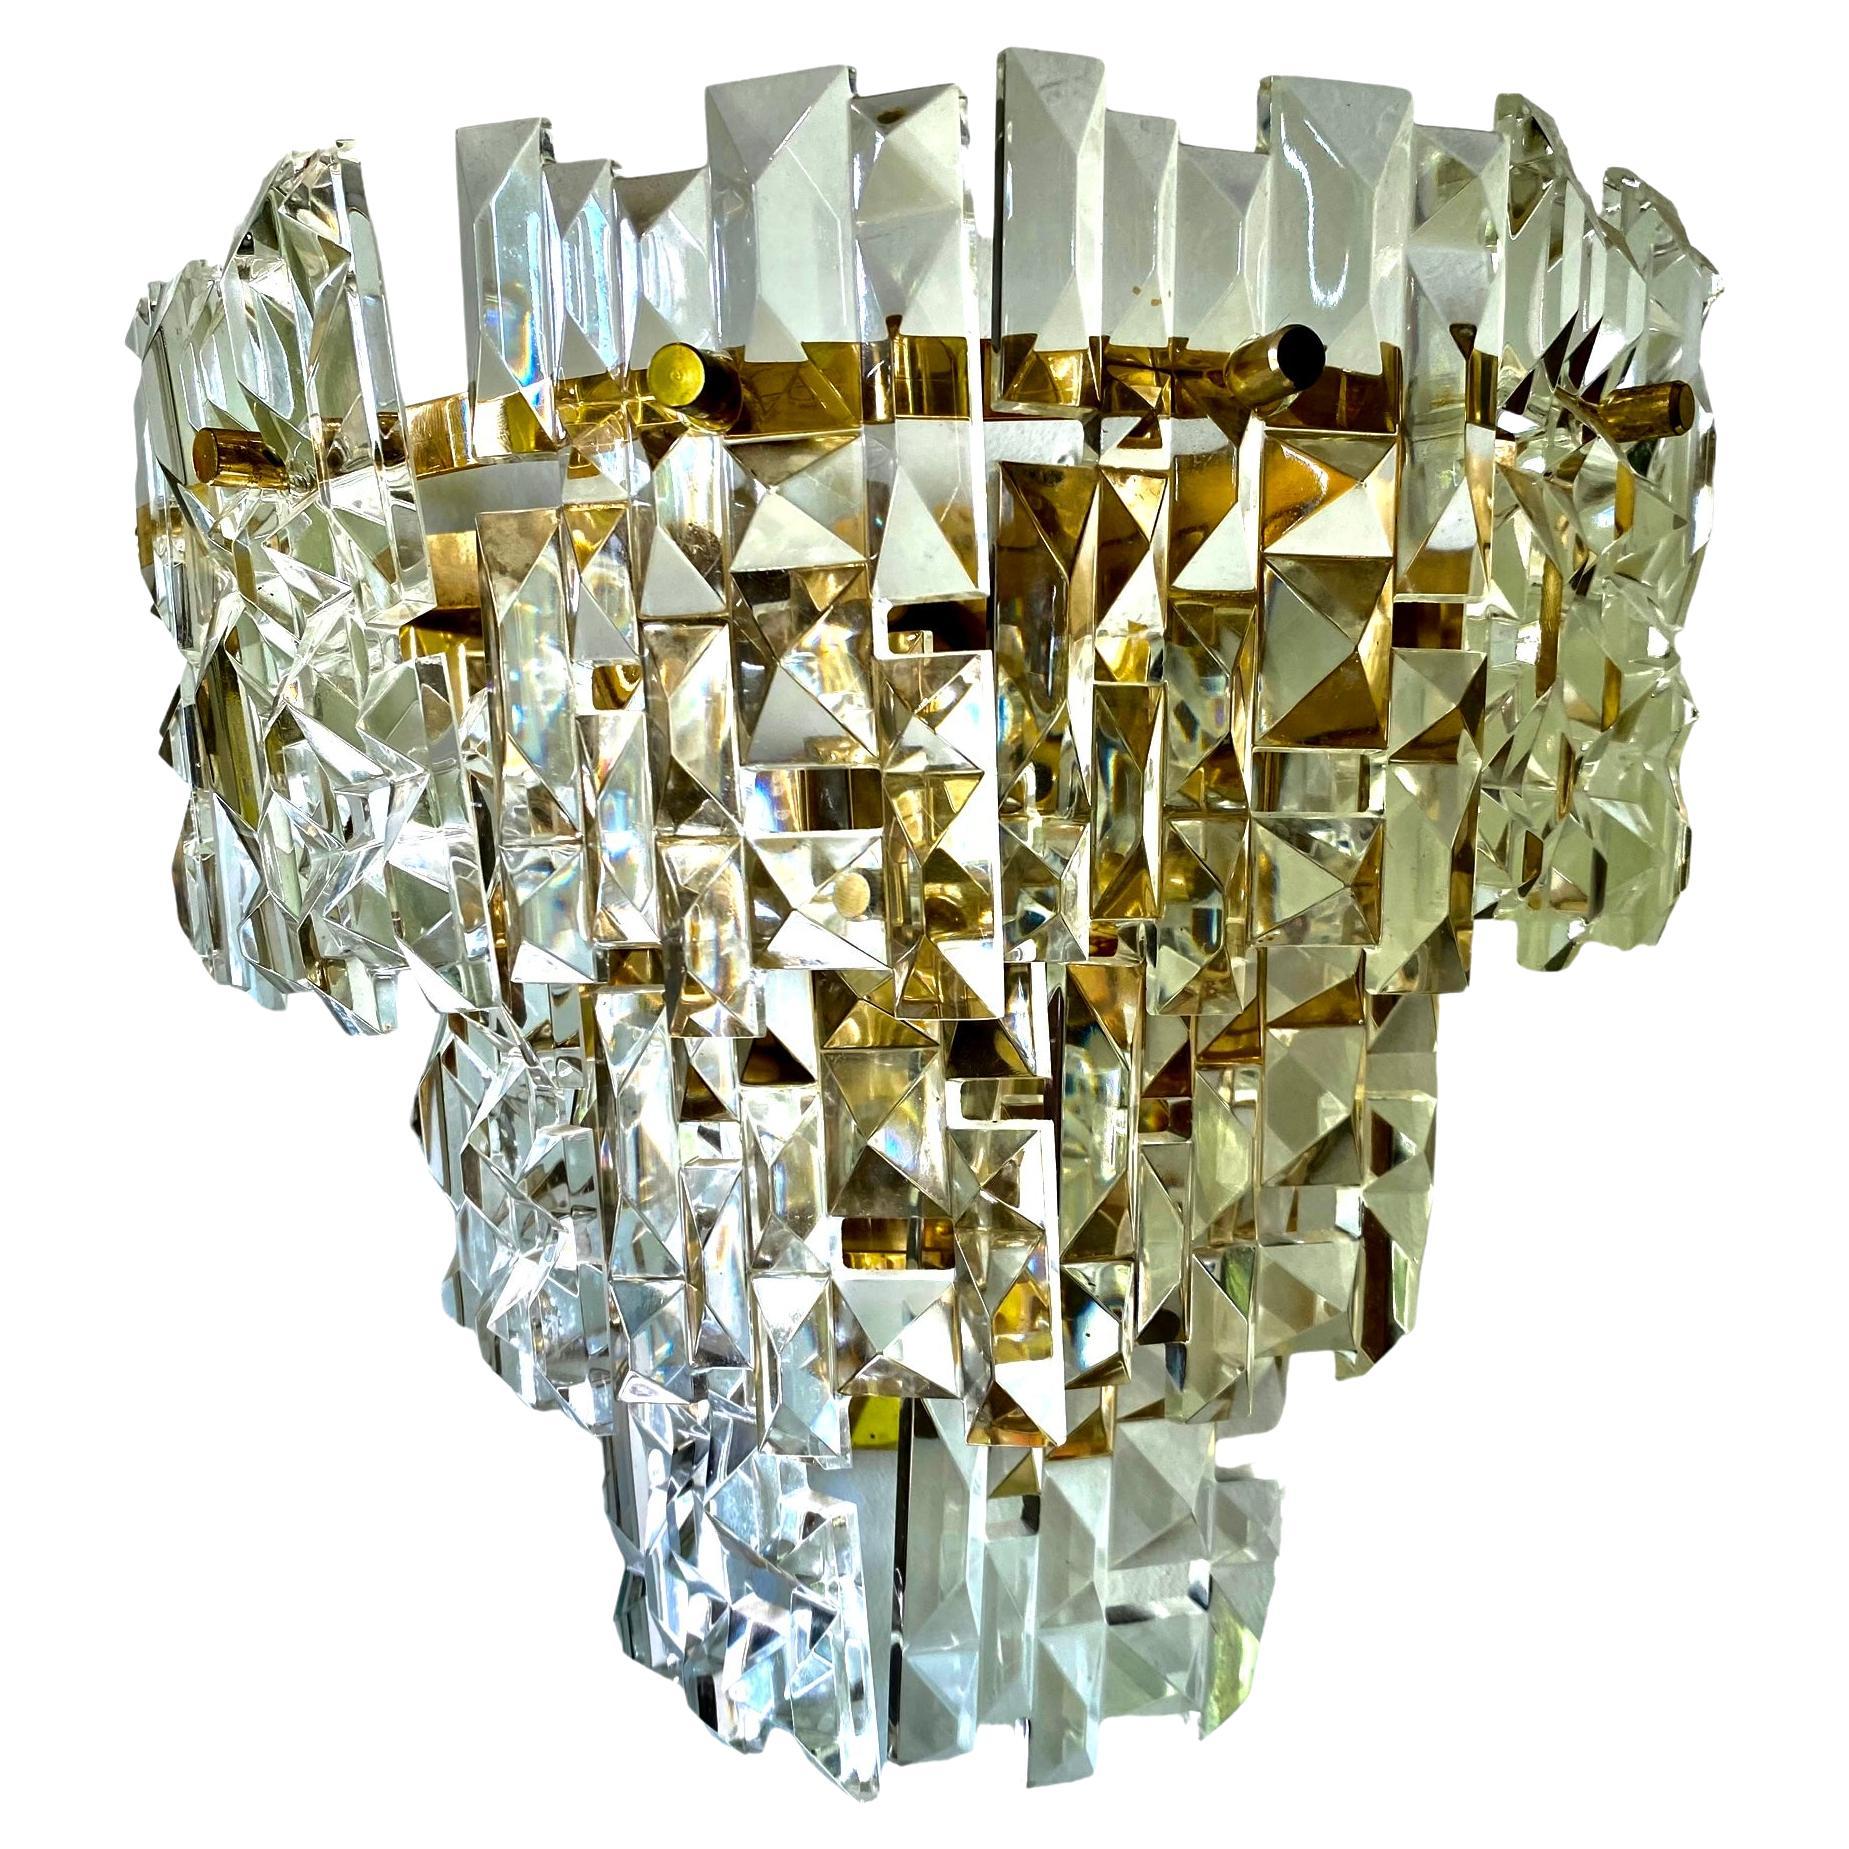 Kinkeldey Wall Lighting Glass Cut with Brass Structure, Austria, 1970